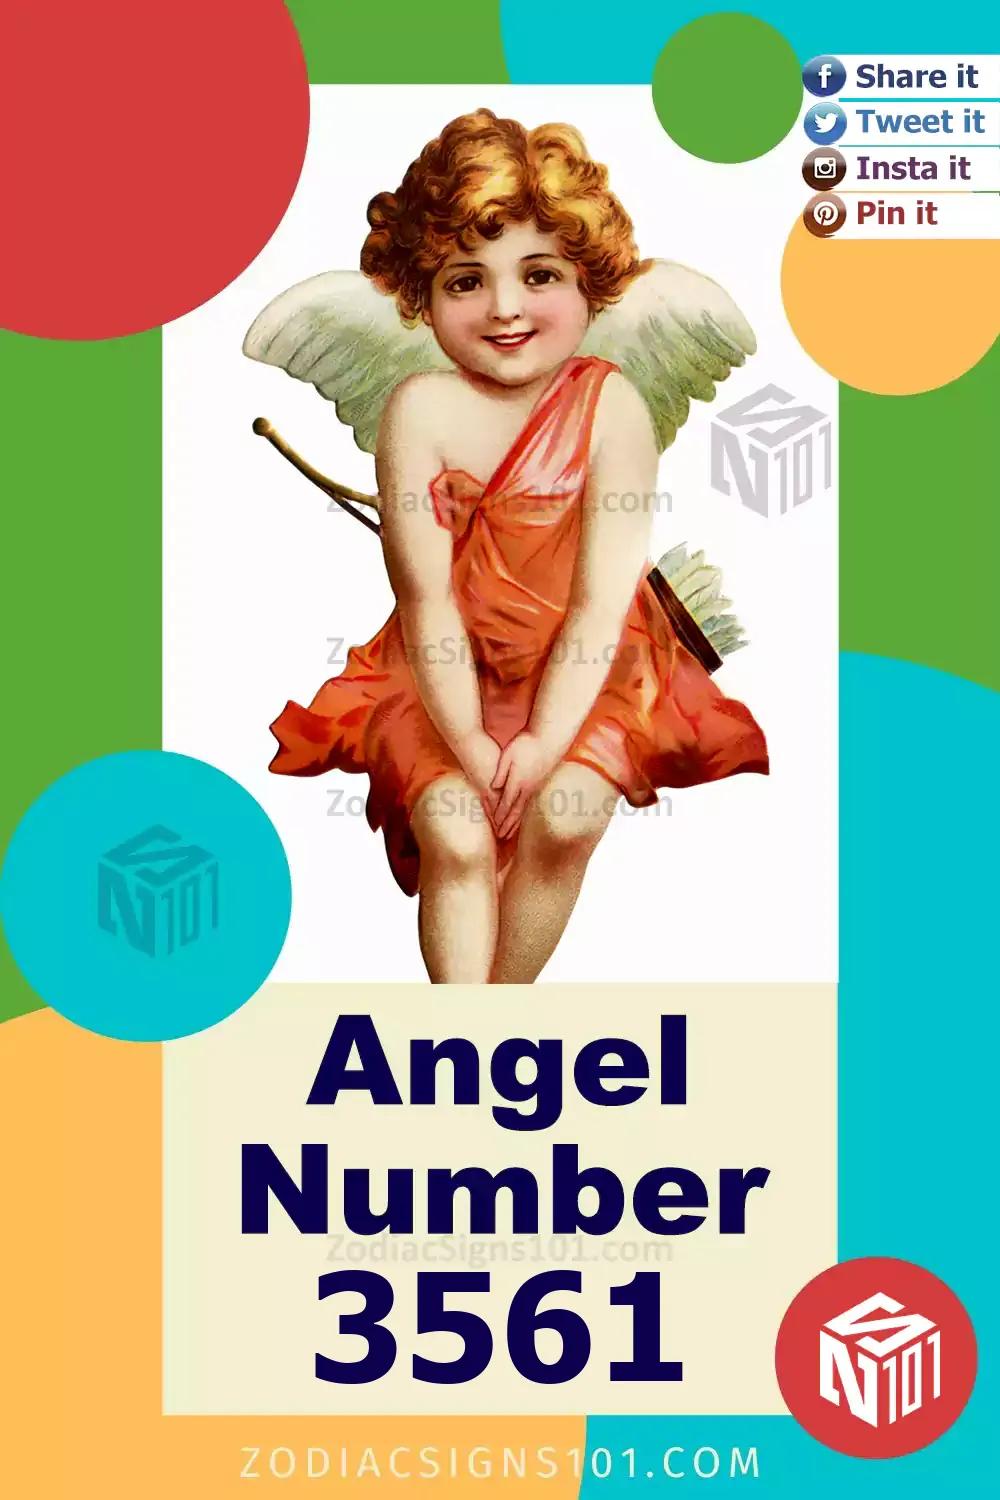 3561-Angel-Number-Meaning.jpg